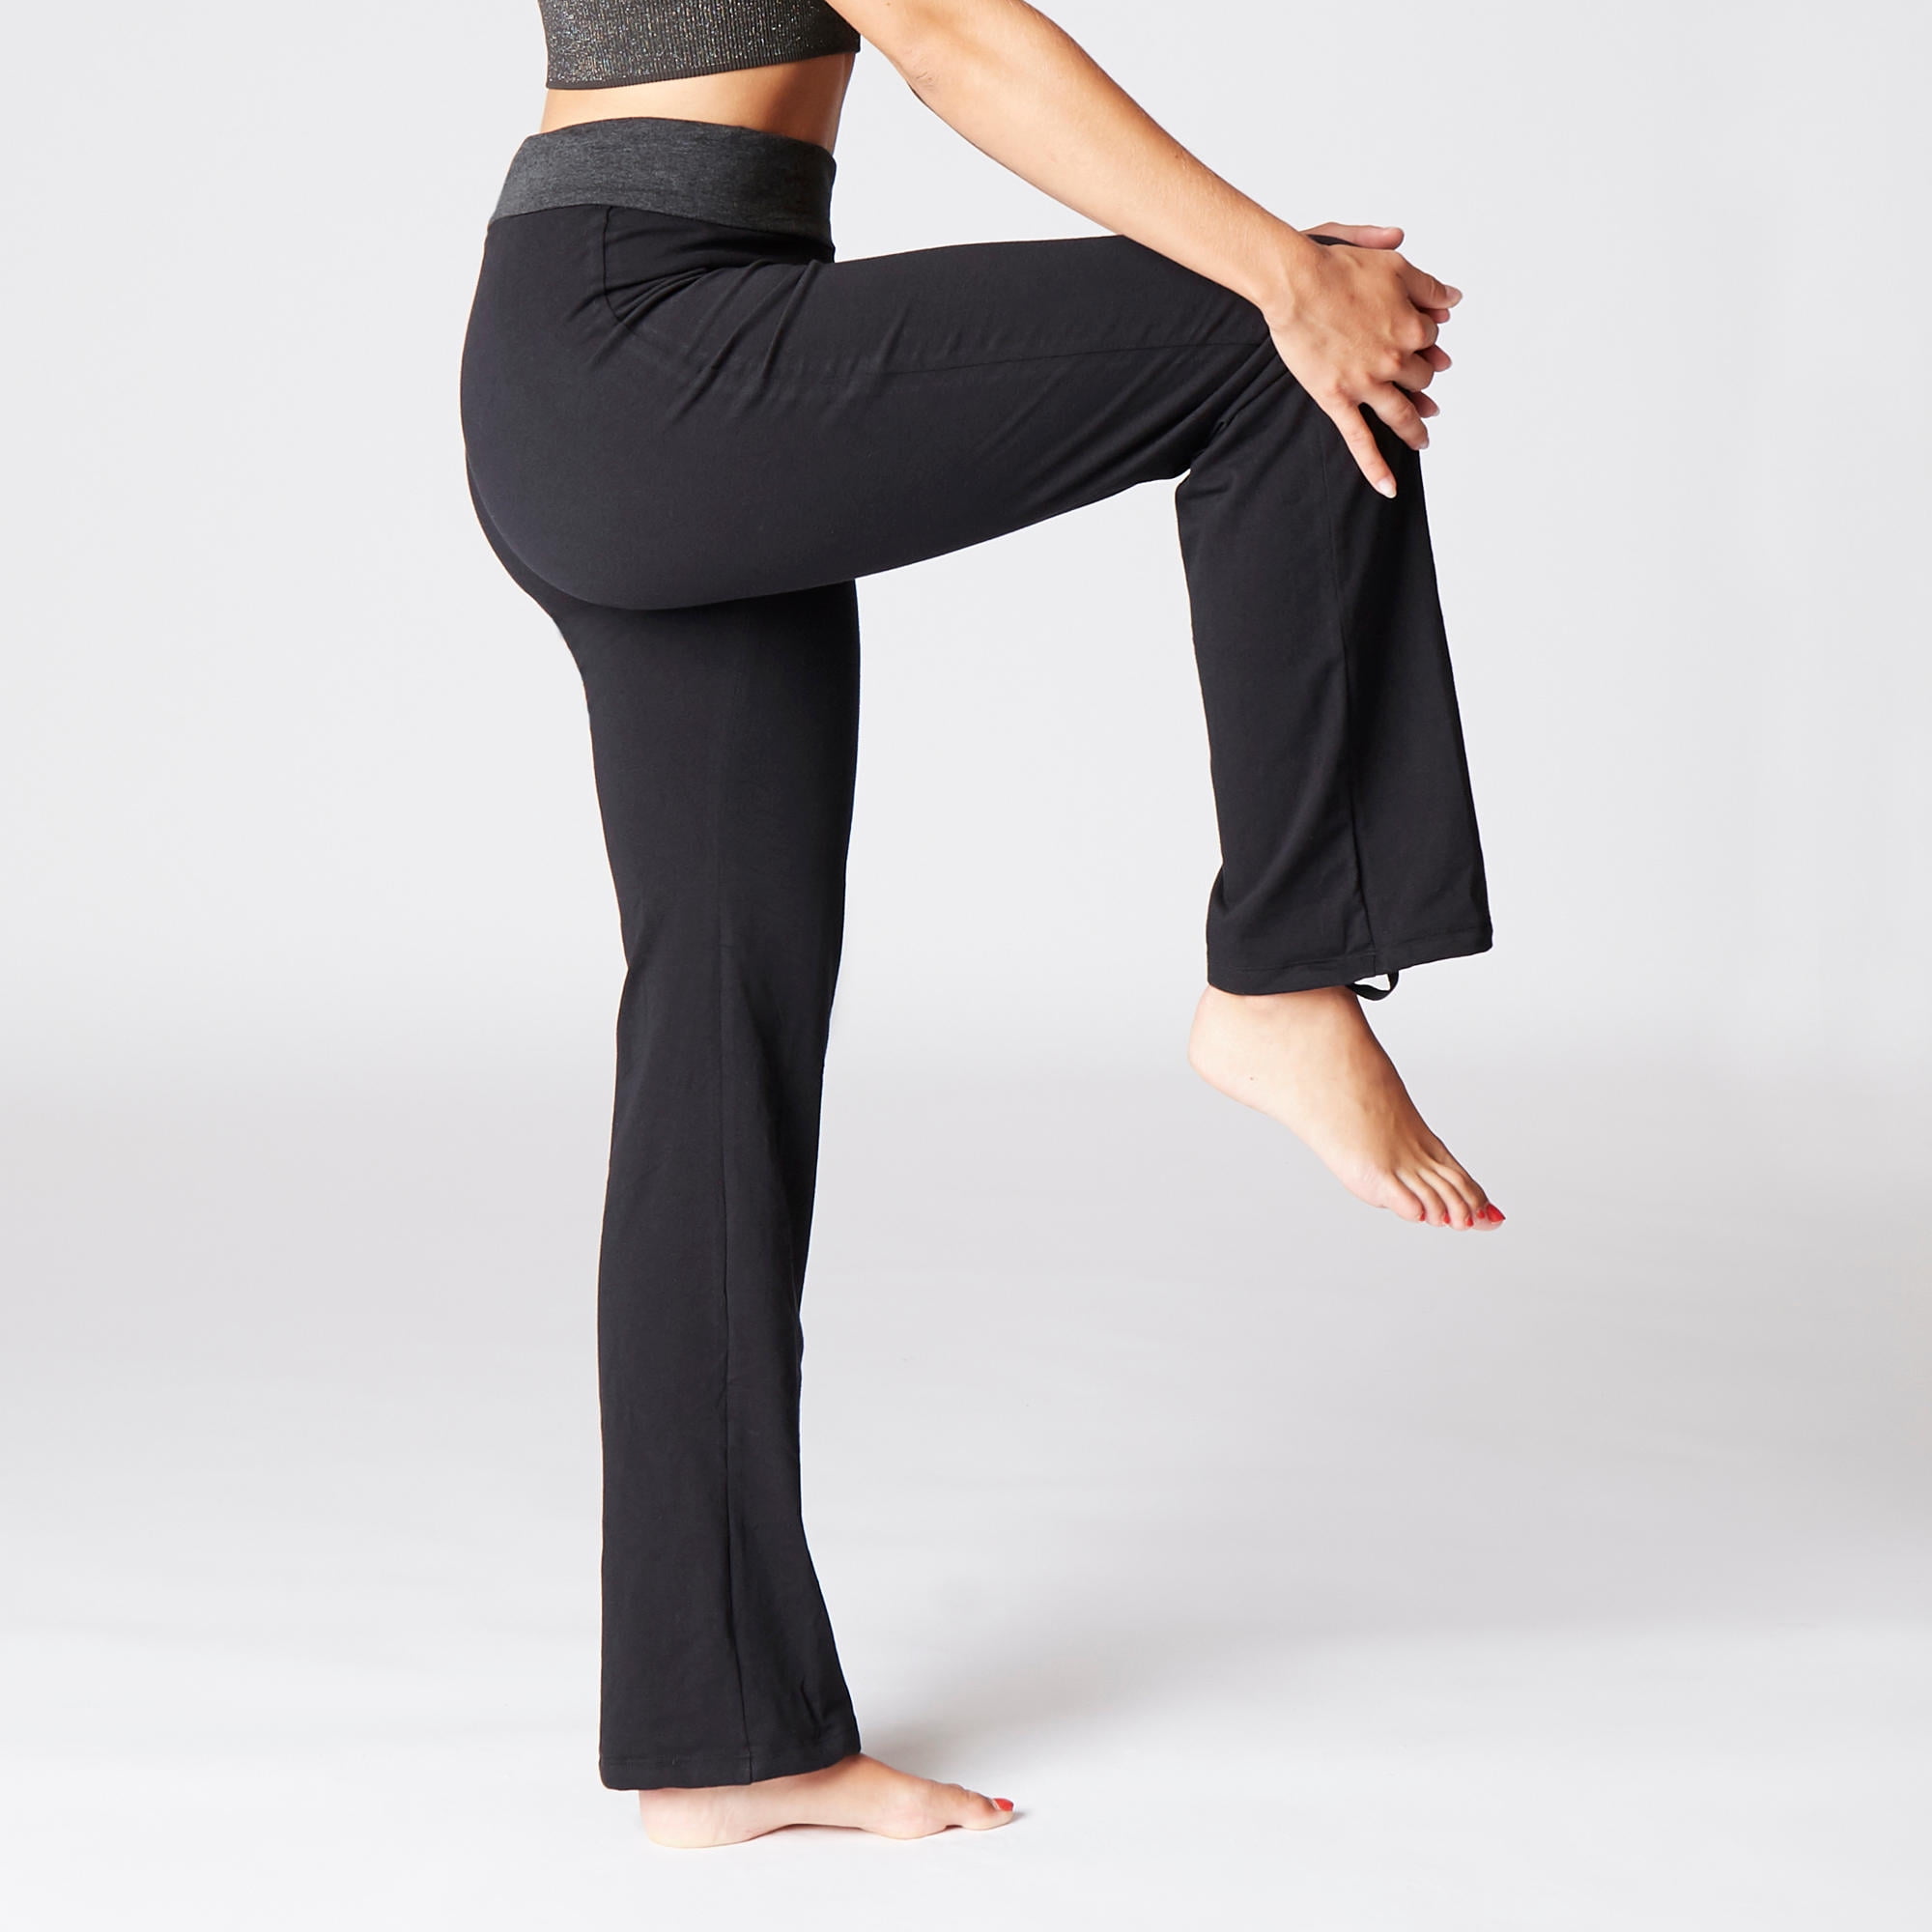 decathlon yoga pants